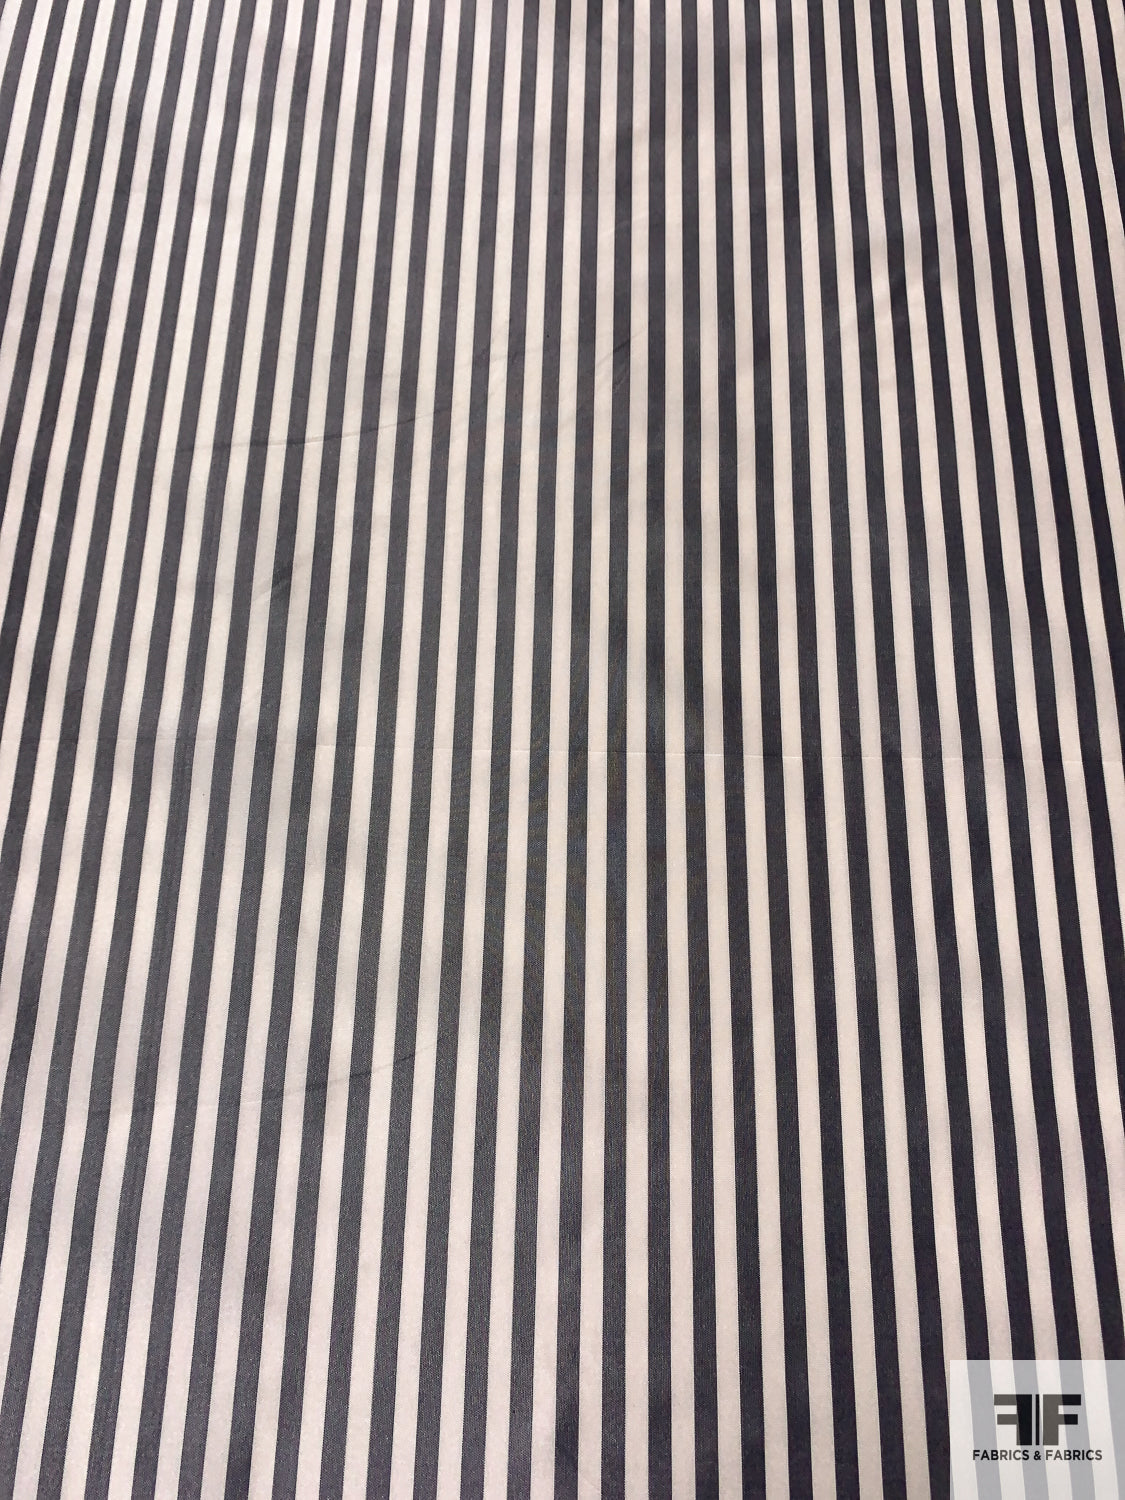 Vertical Striped Silk Taffeta - Muted Black / Ivory